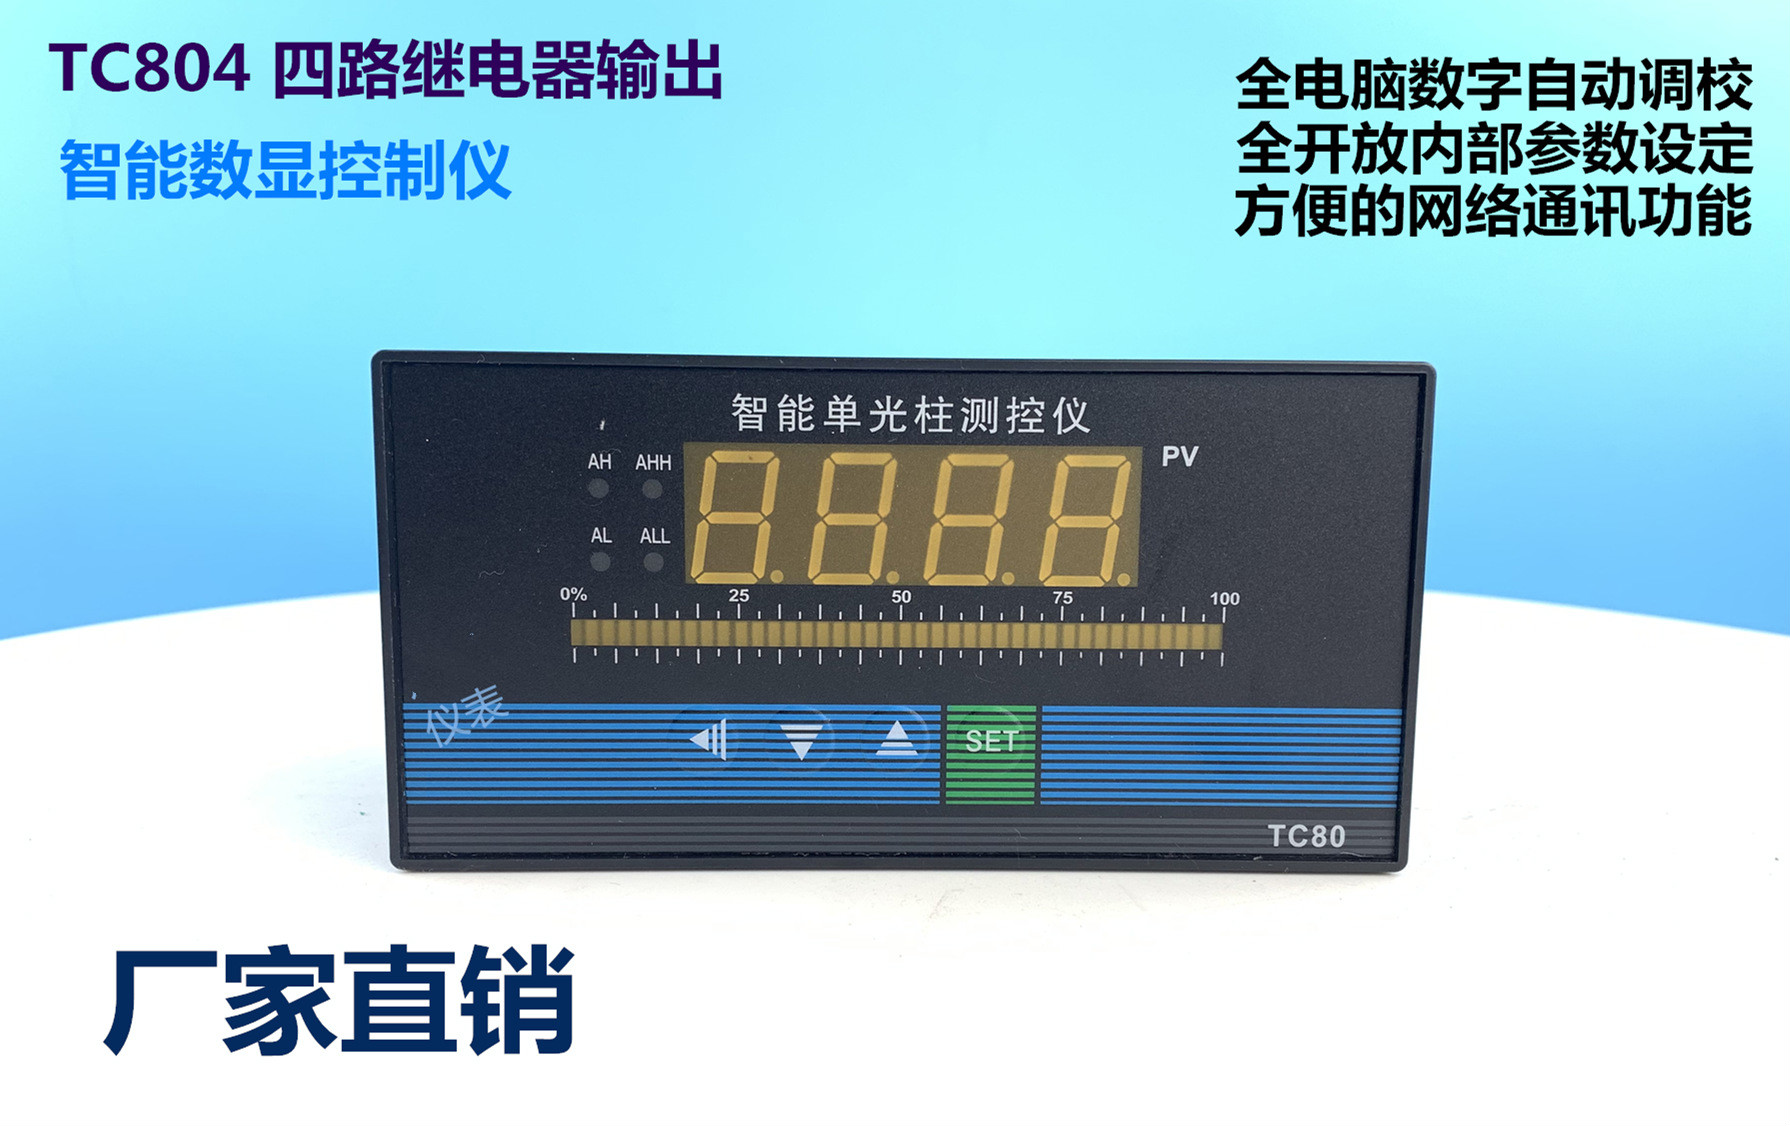 c80 智能 单回路 测控仪 压力 液位 温度数显仪表输入 温控仪 c803